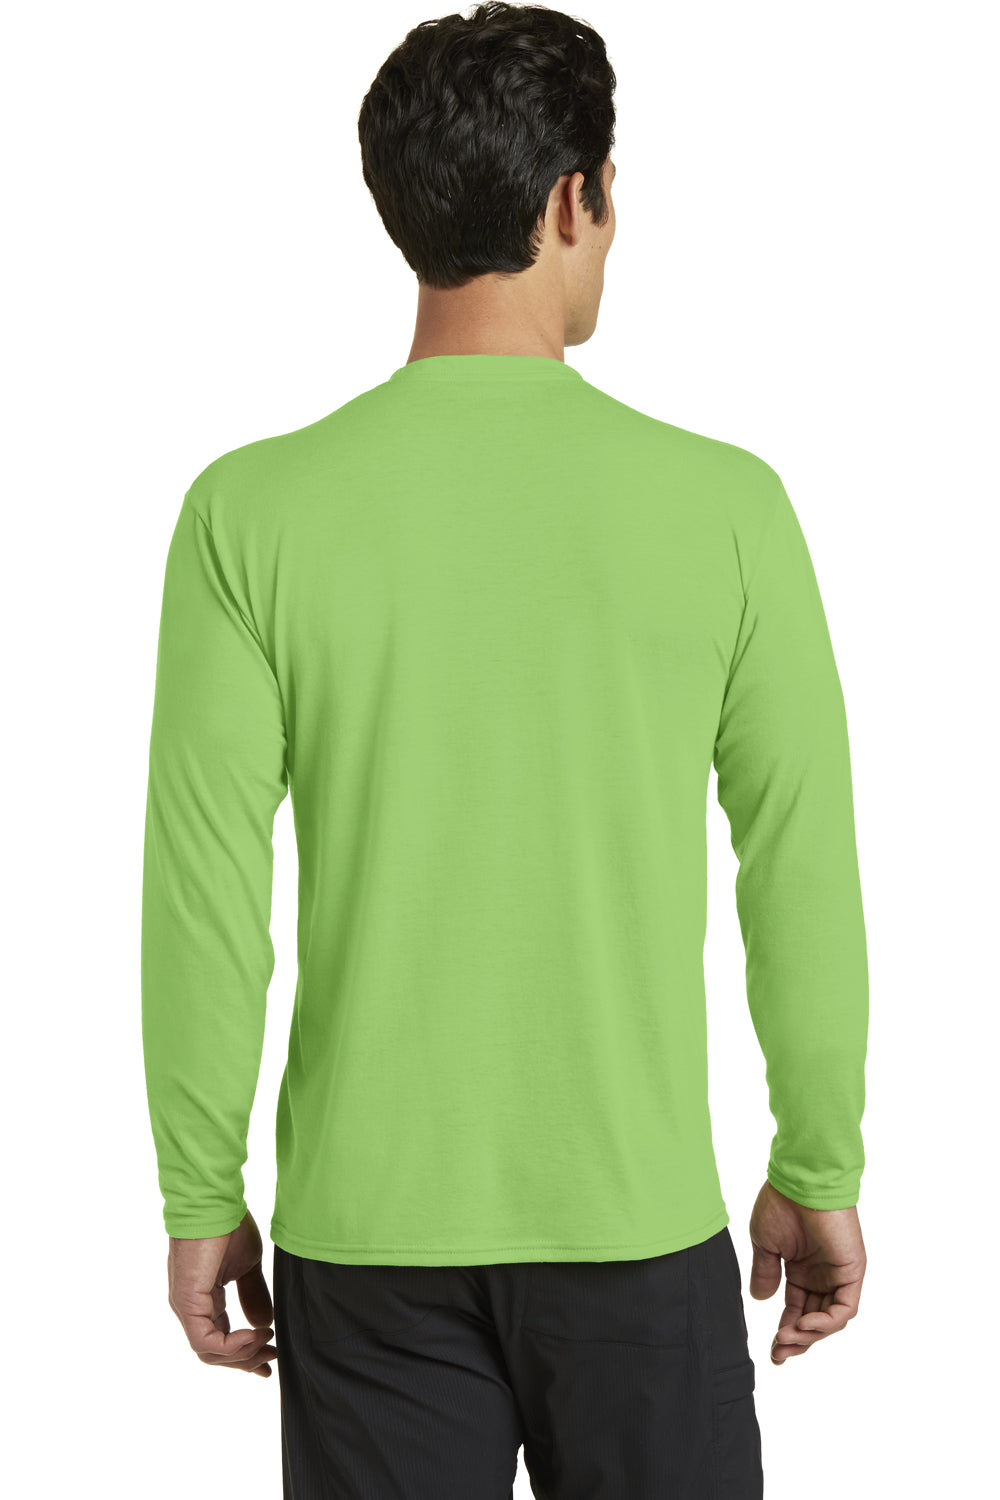 Port & Company PC381LS Mens Dry Zone Performance Moisture Wicking Long Sleeve Crewneck T-Shirt Lime Green Back